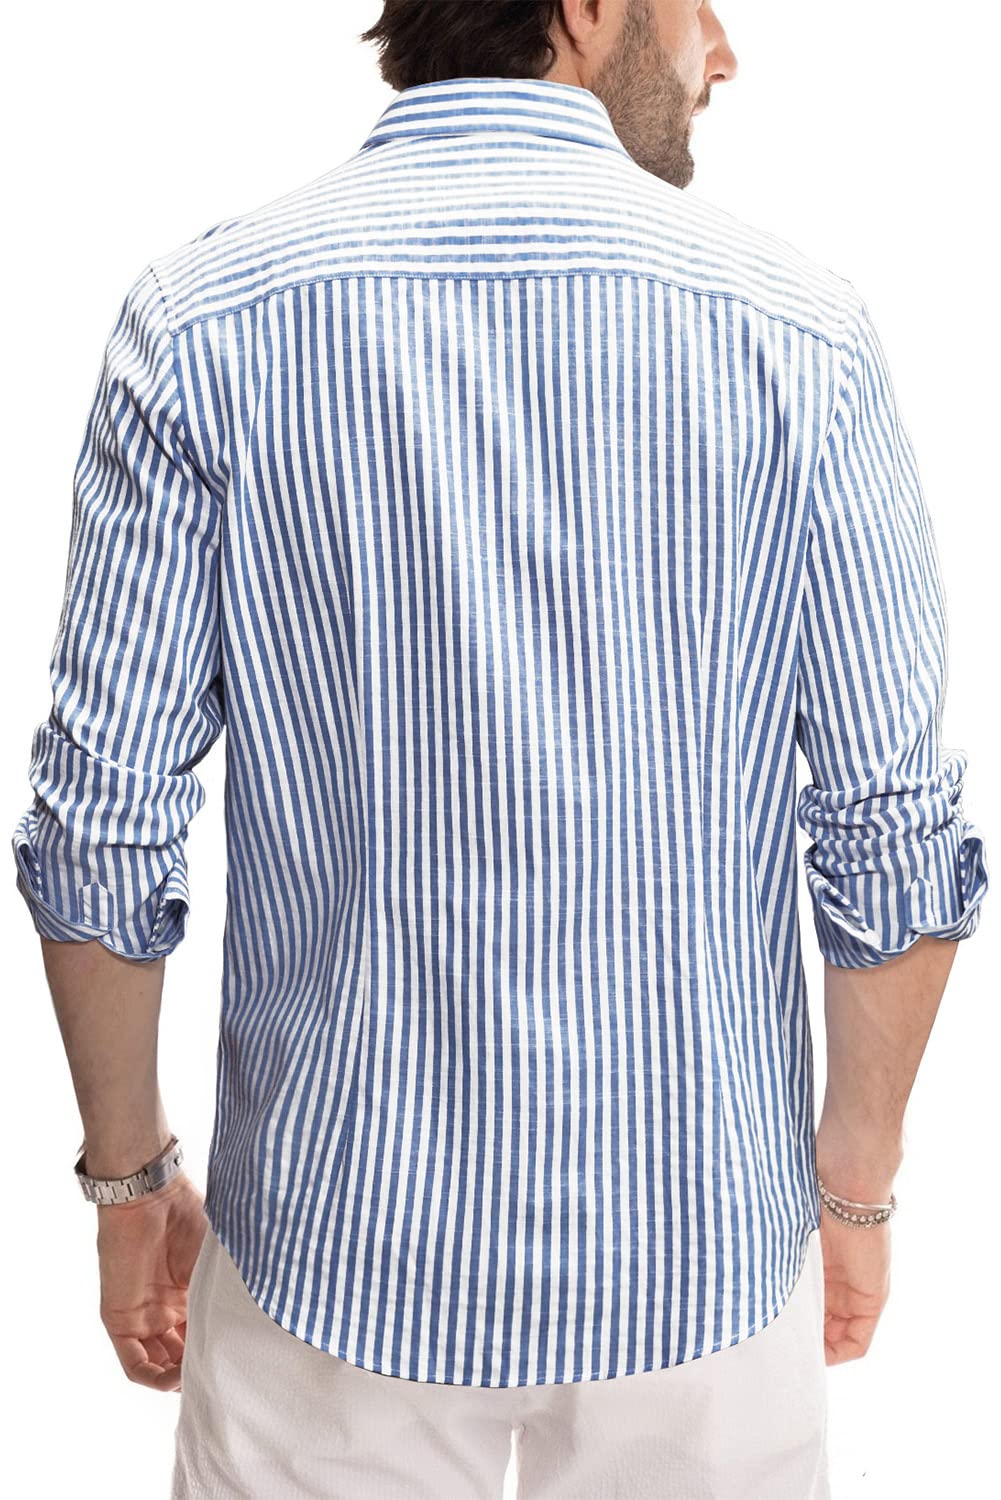 Buy JMIERR Men's Linen Shirts Casual Long Sleeve Button-Down